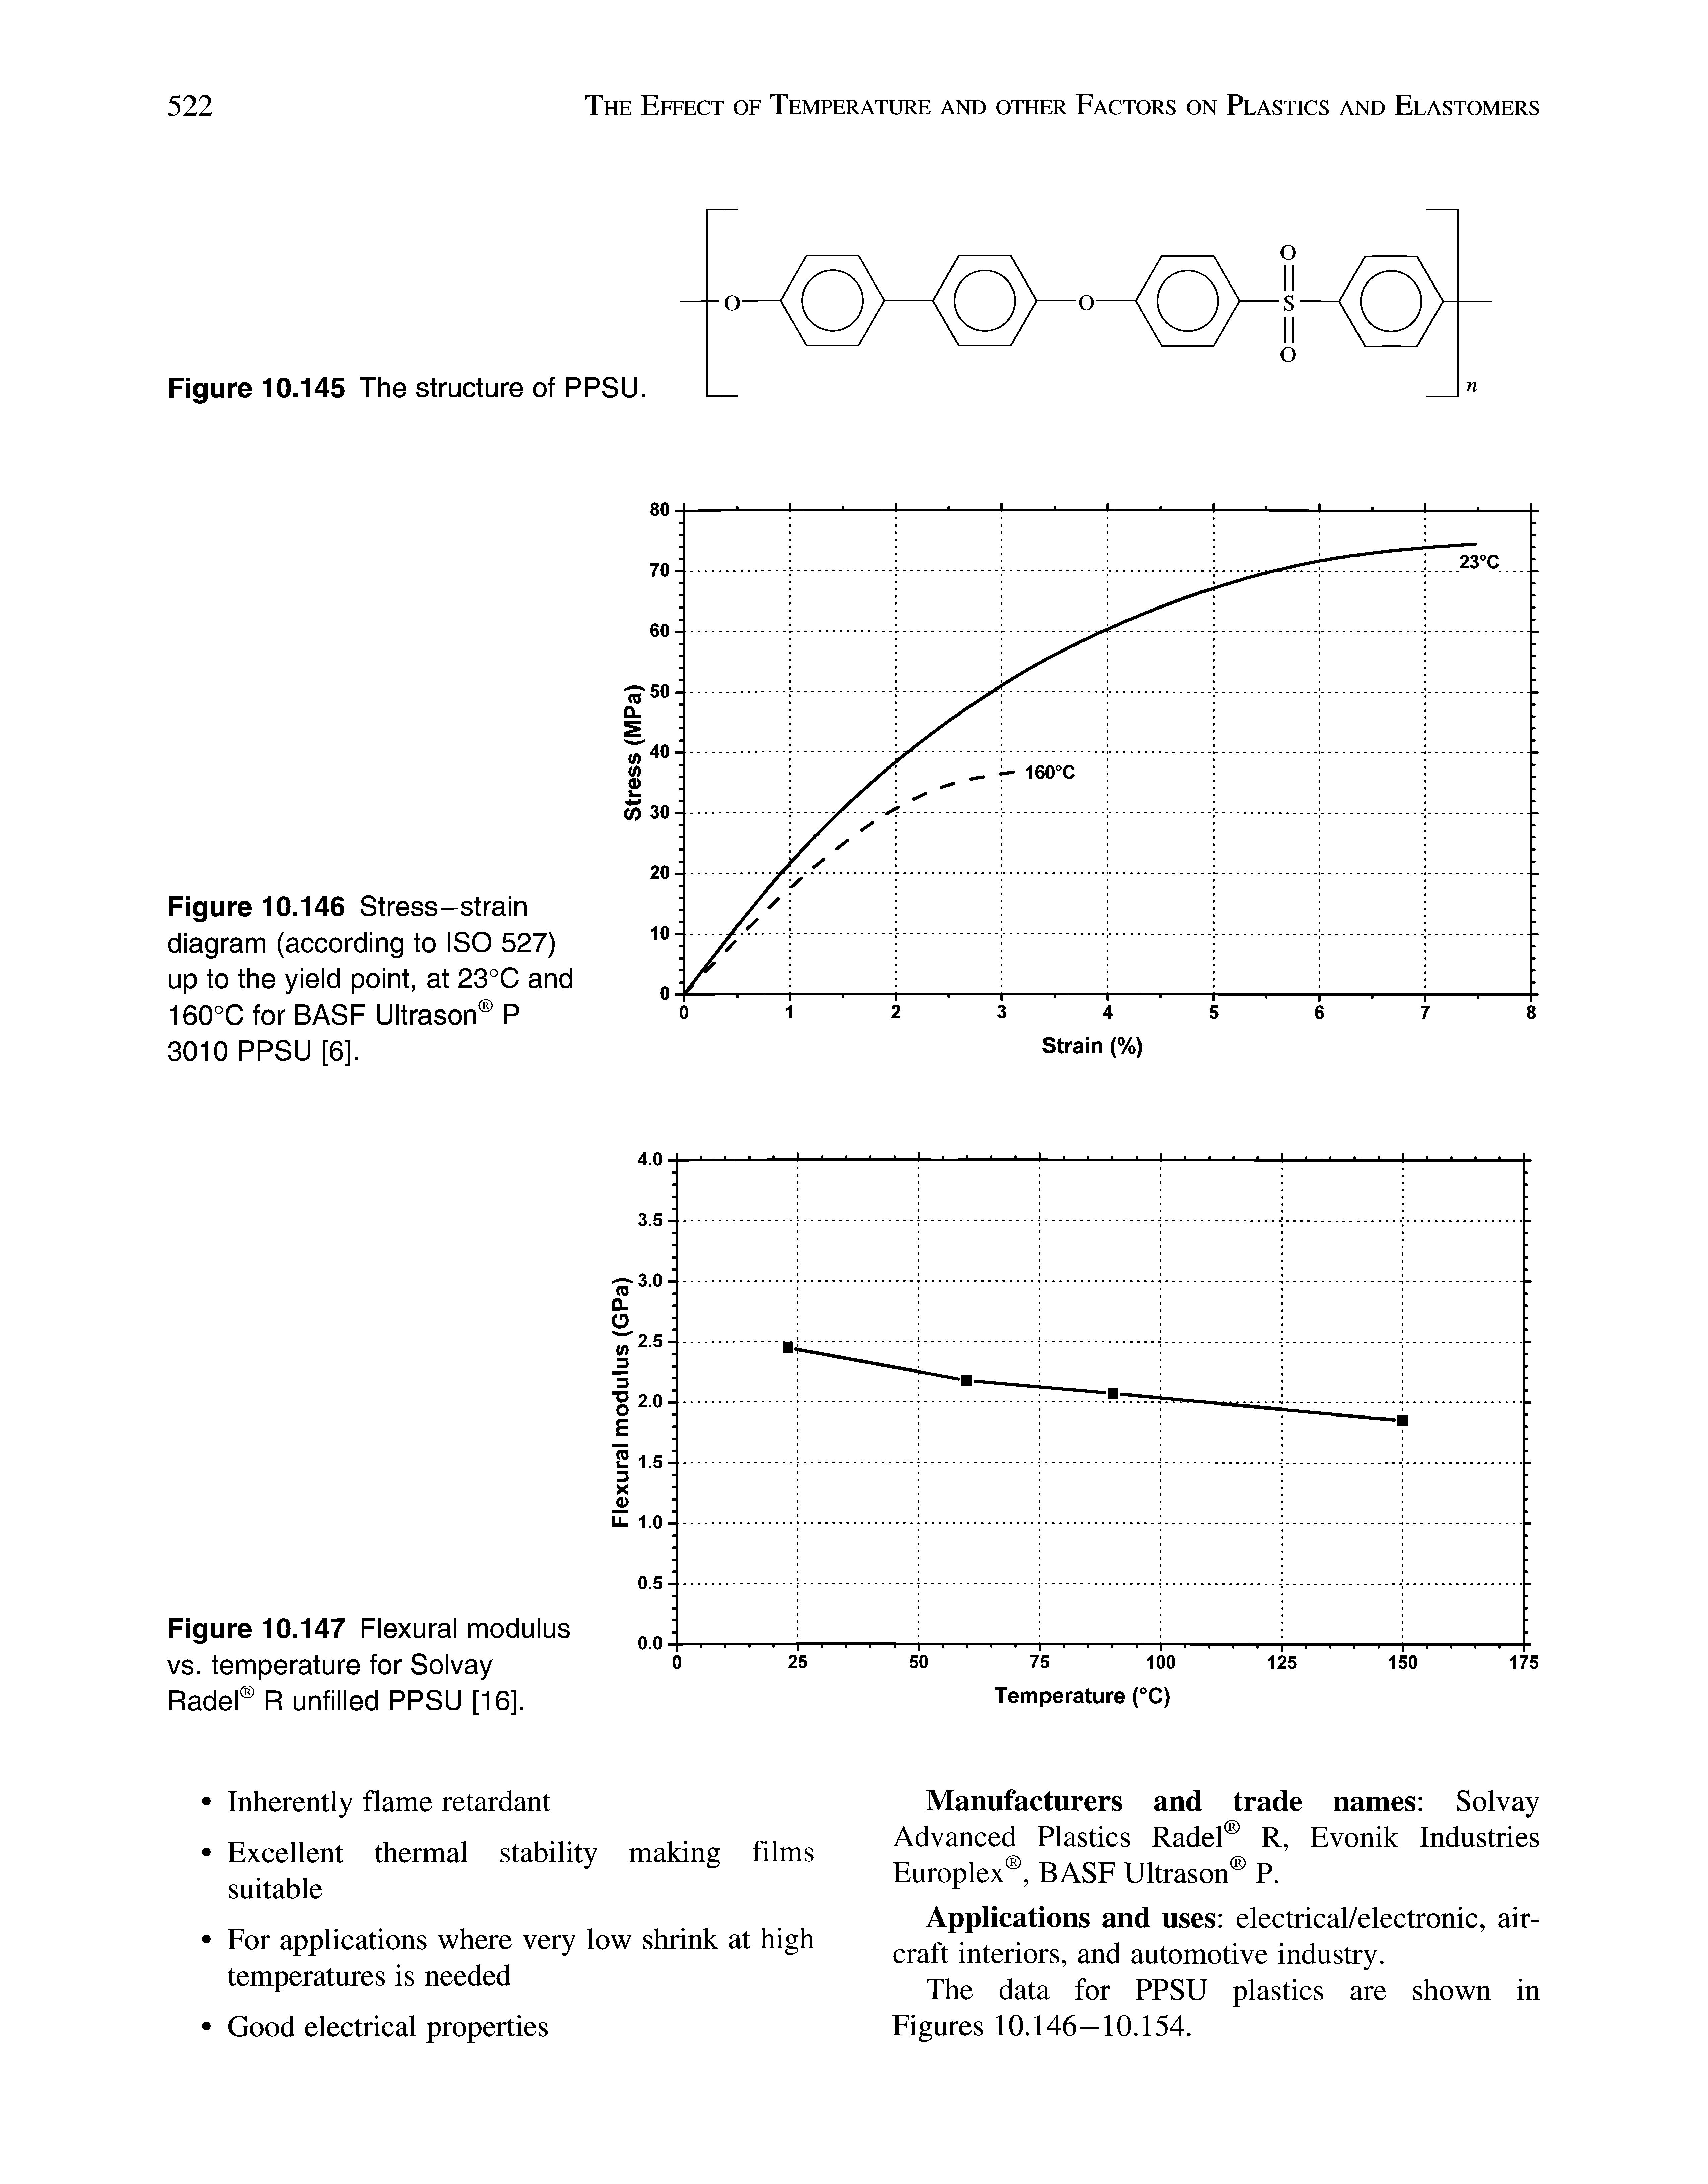 Figure 10.147 Flexural modulus vs. temperature for Solvay Radel R unfilled PPSU [16].